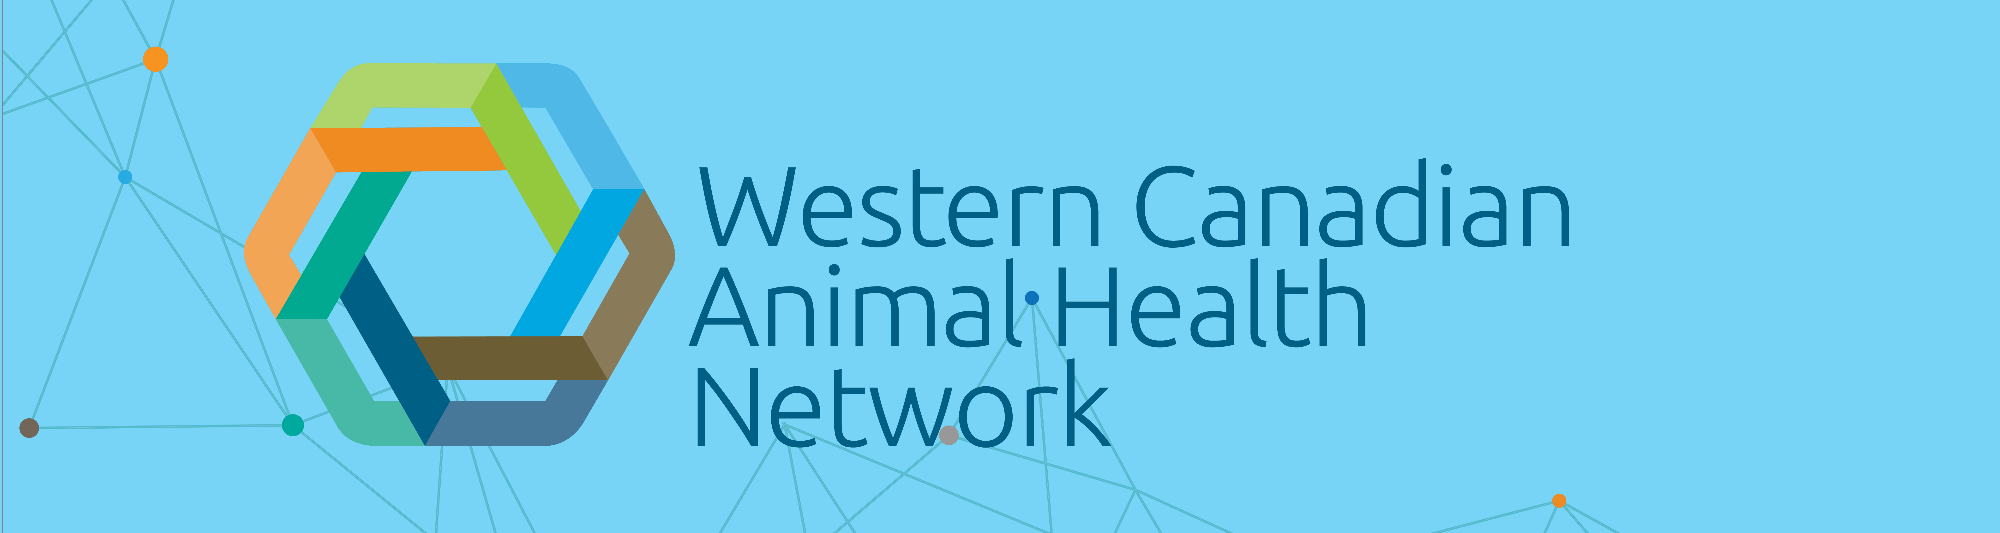 Western Canadian Animal Health Network Banner